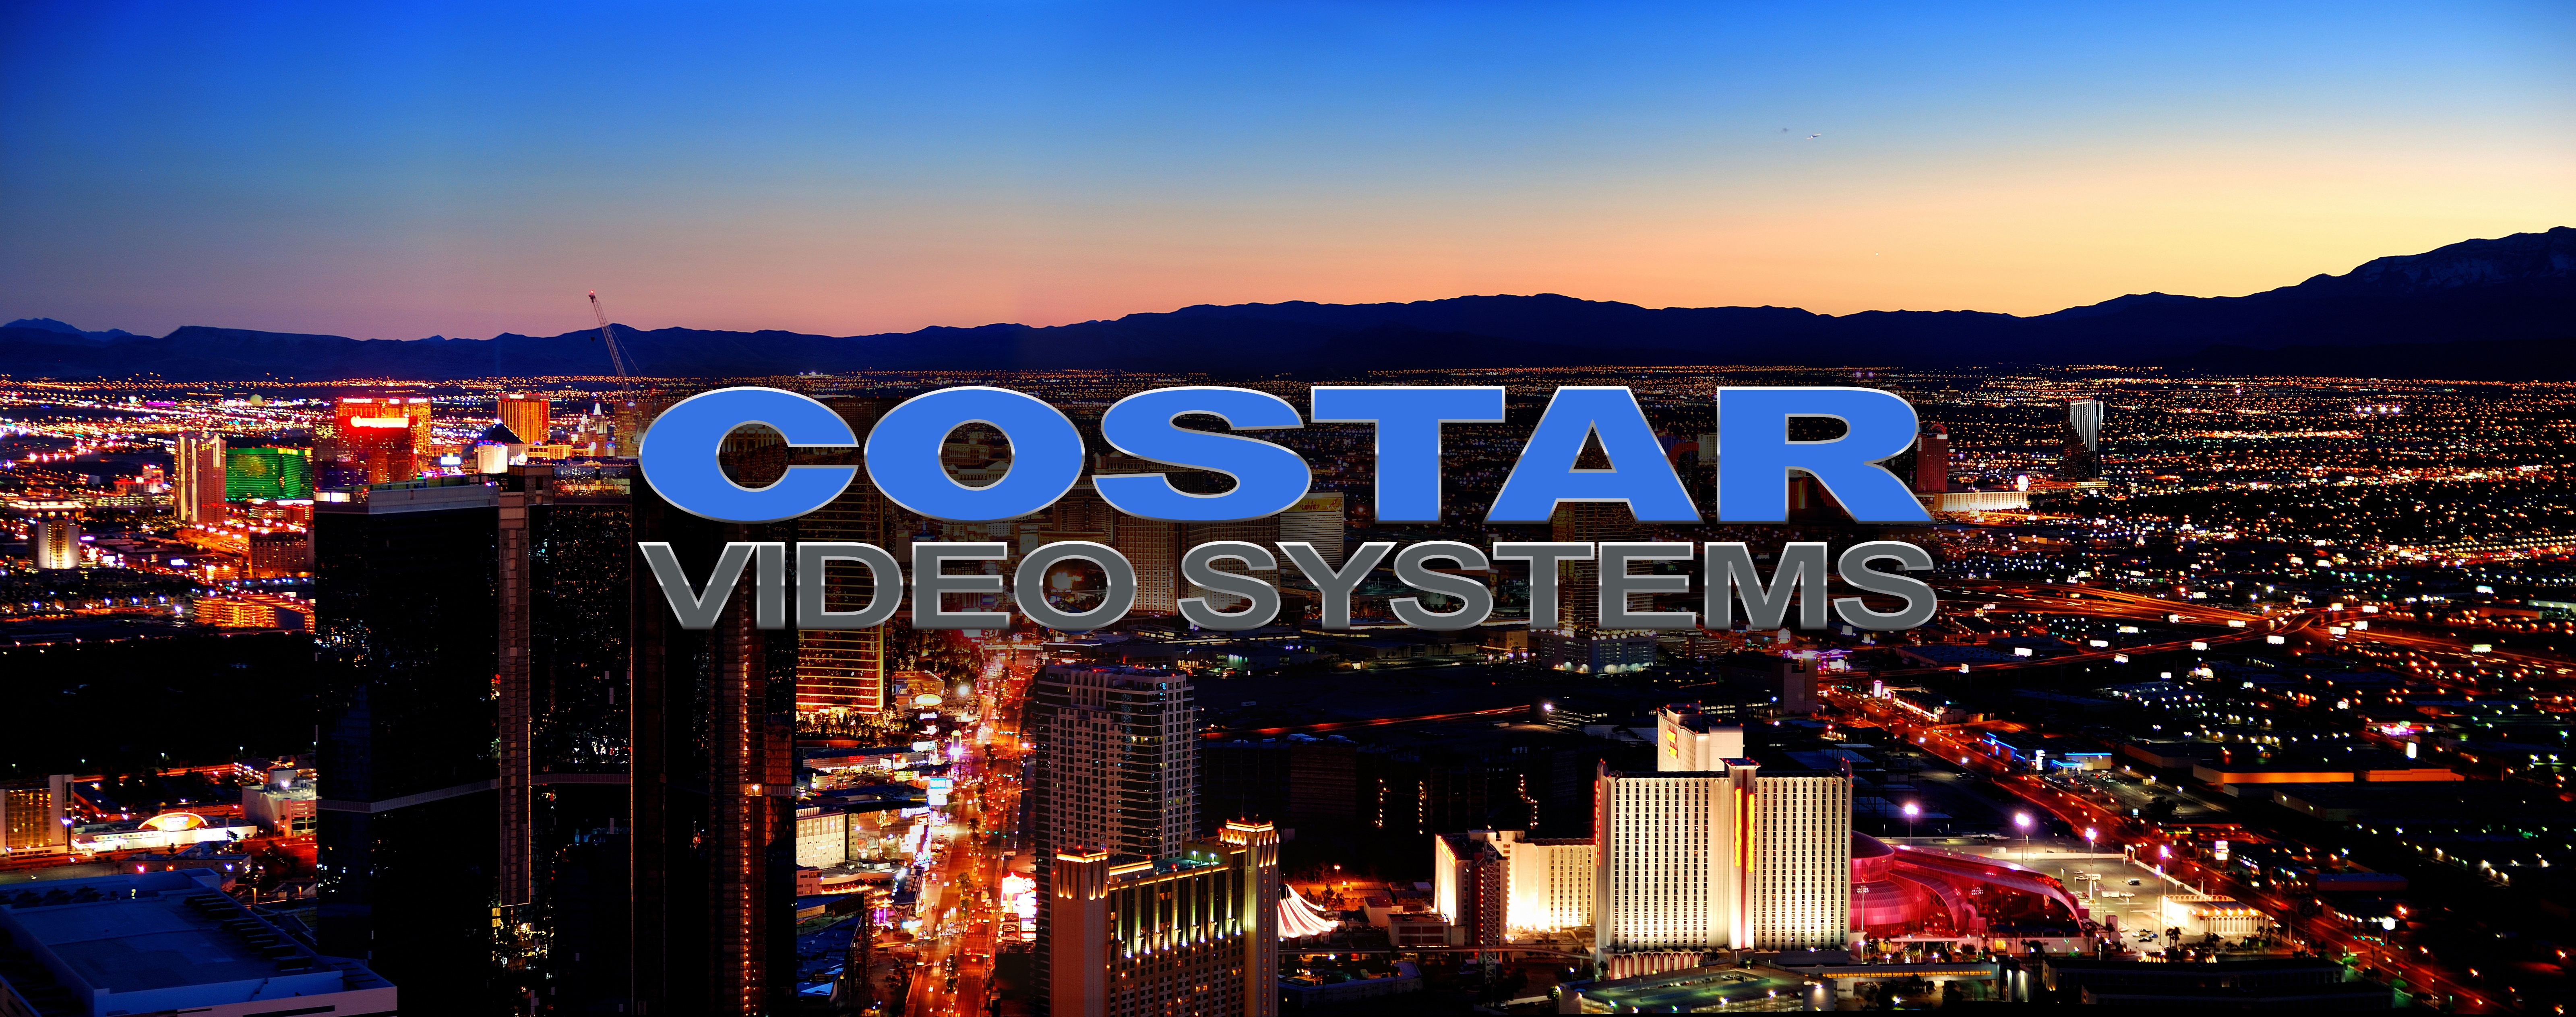 Costar Video Systems Las Vegas.jpg